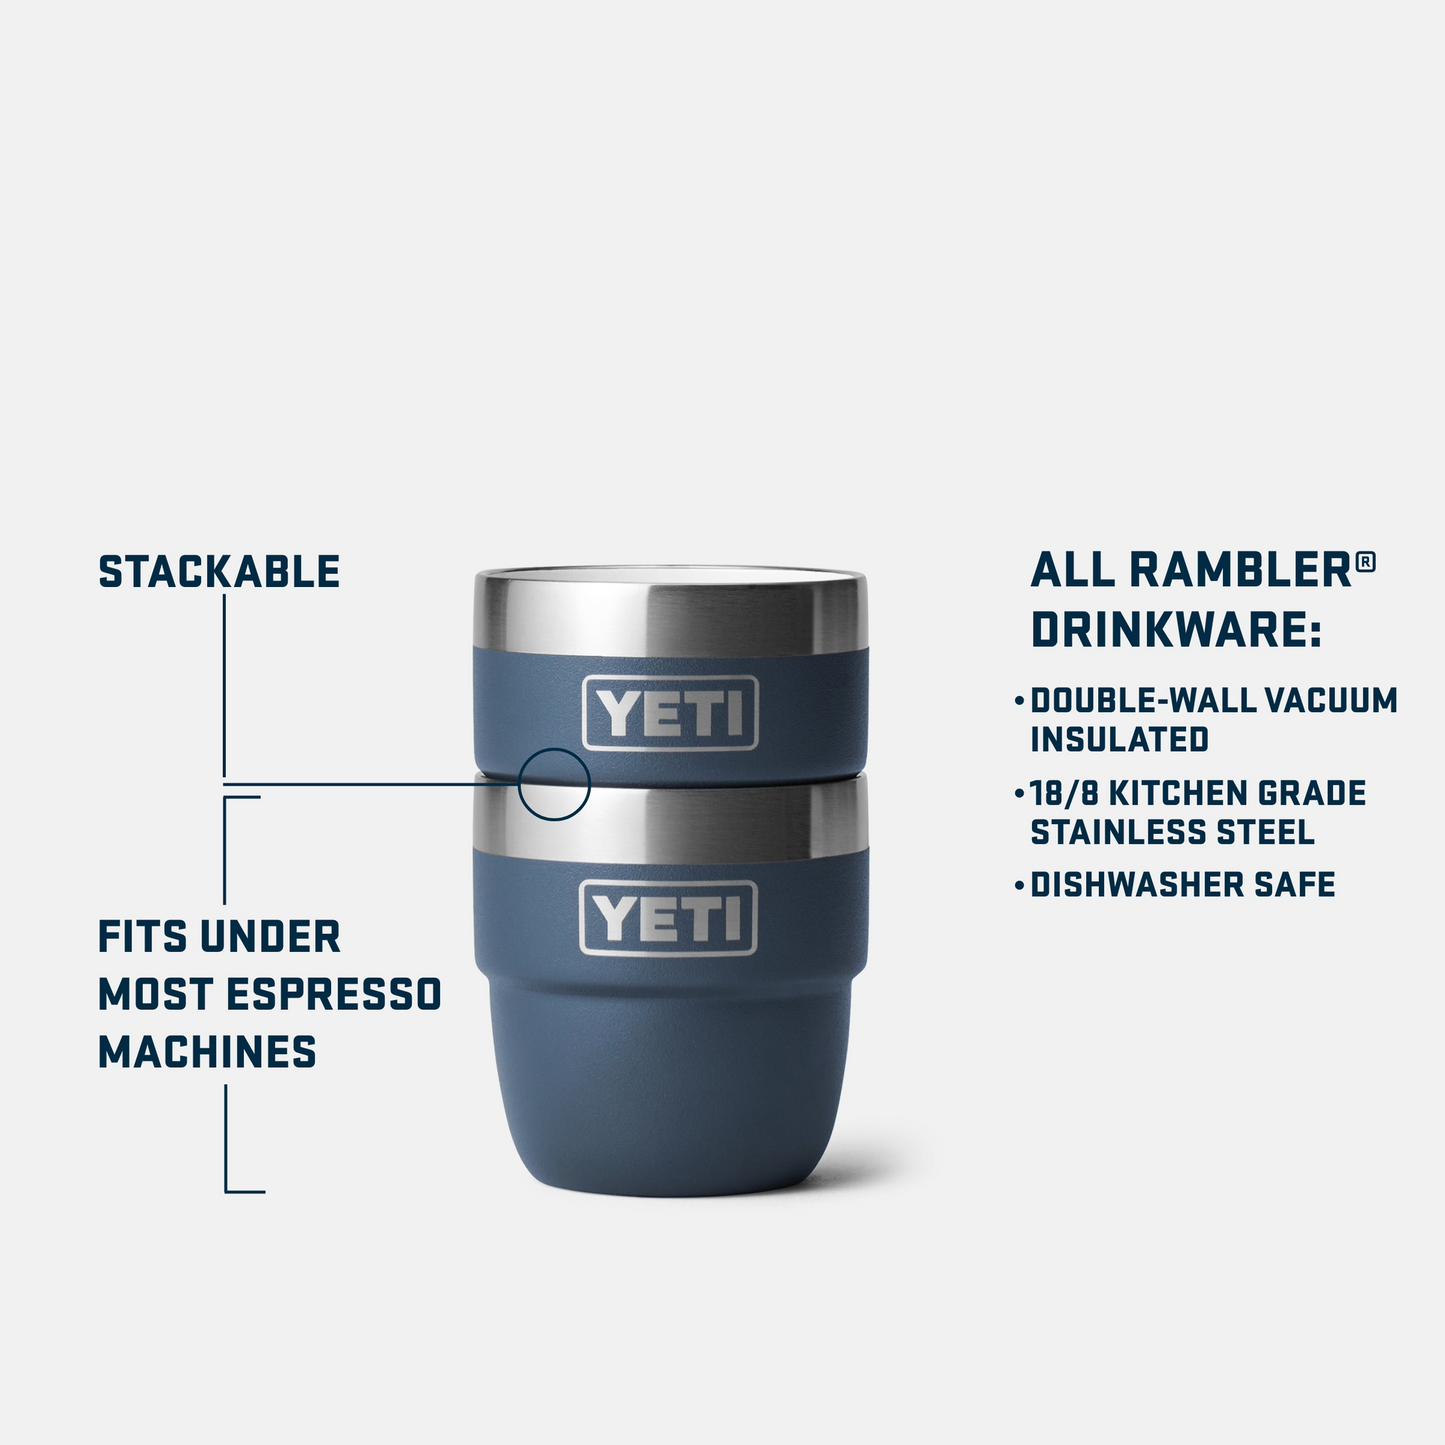 YETI Rambler® 4 oz (118 ml) Stackable Cups Sea Foam